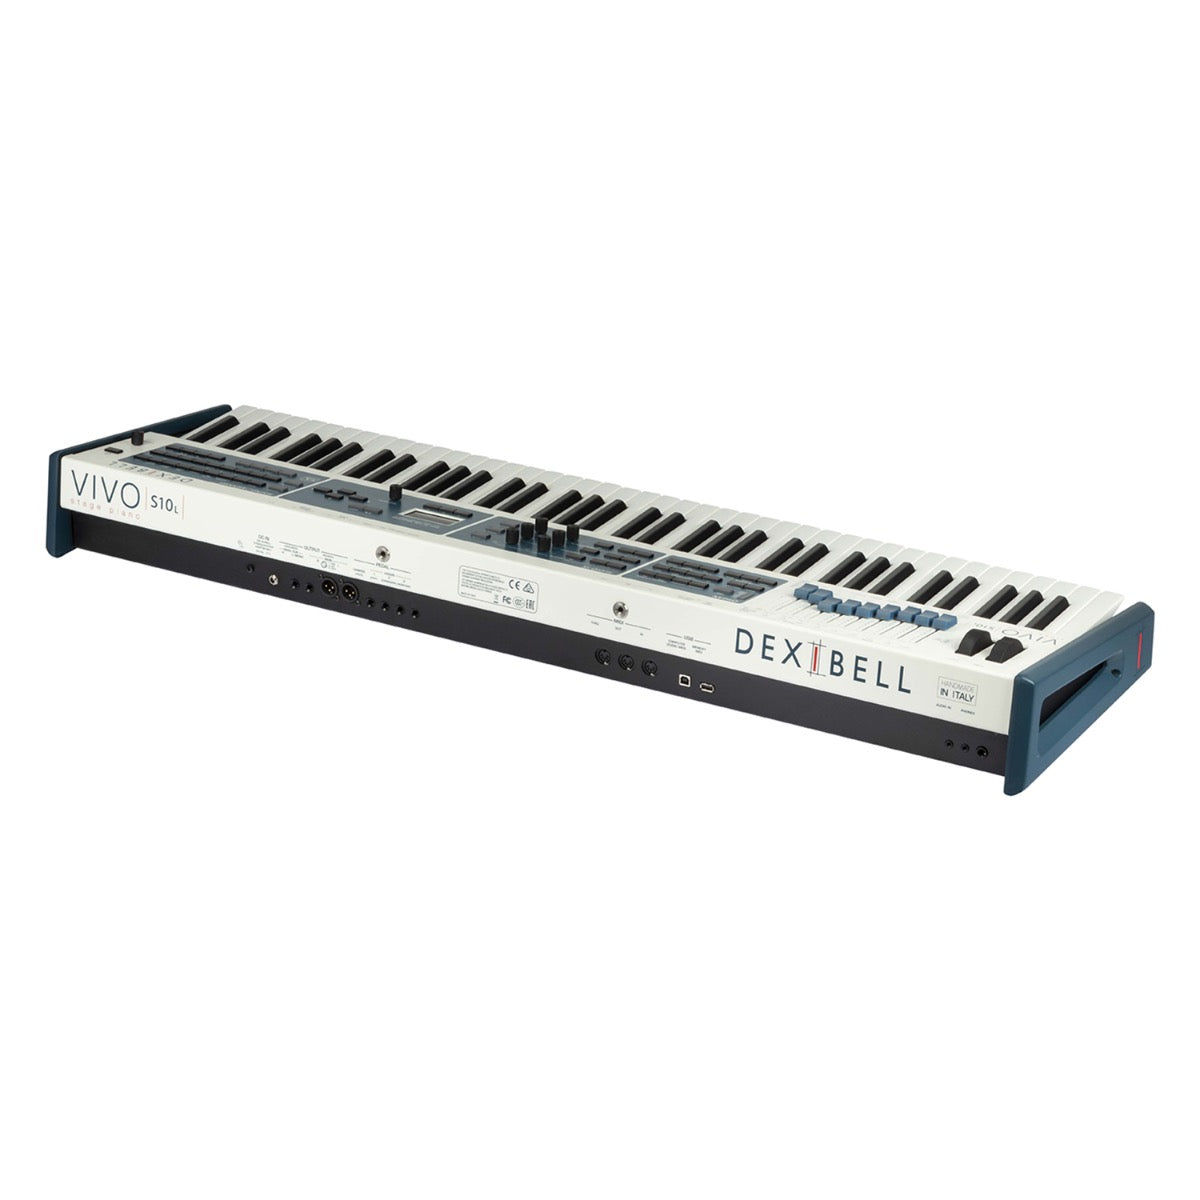 Dexibell VIVO S10L 76-Note Stage Piano, View 4